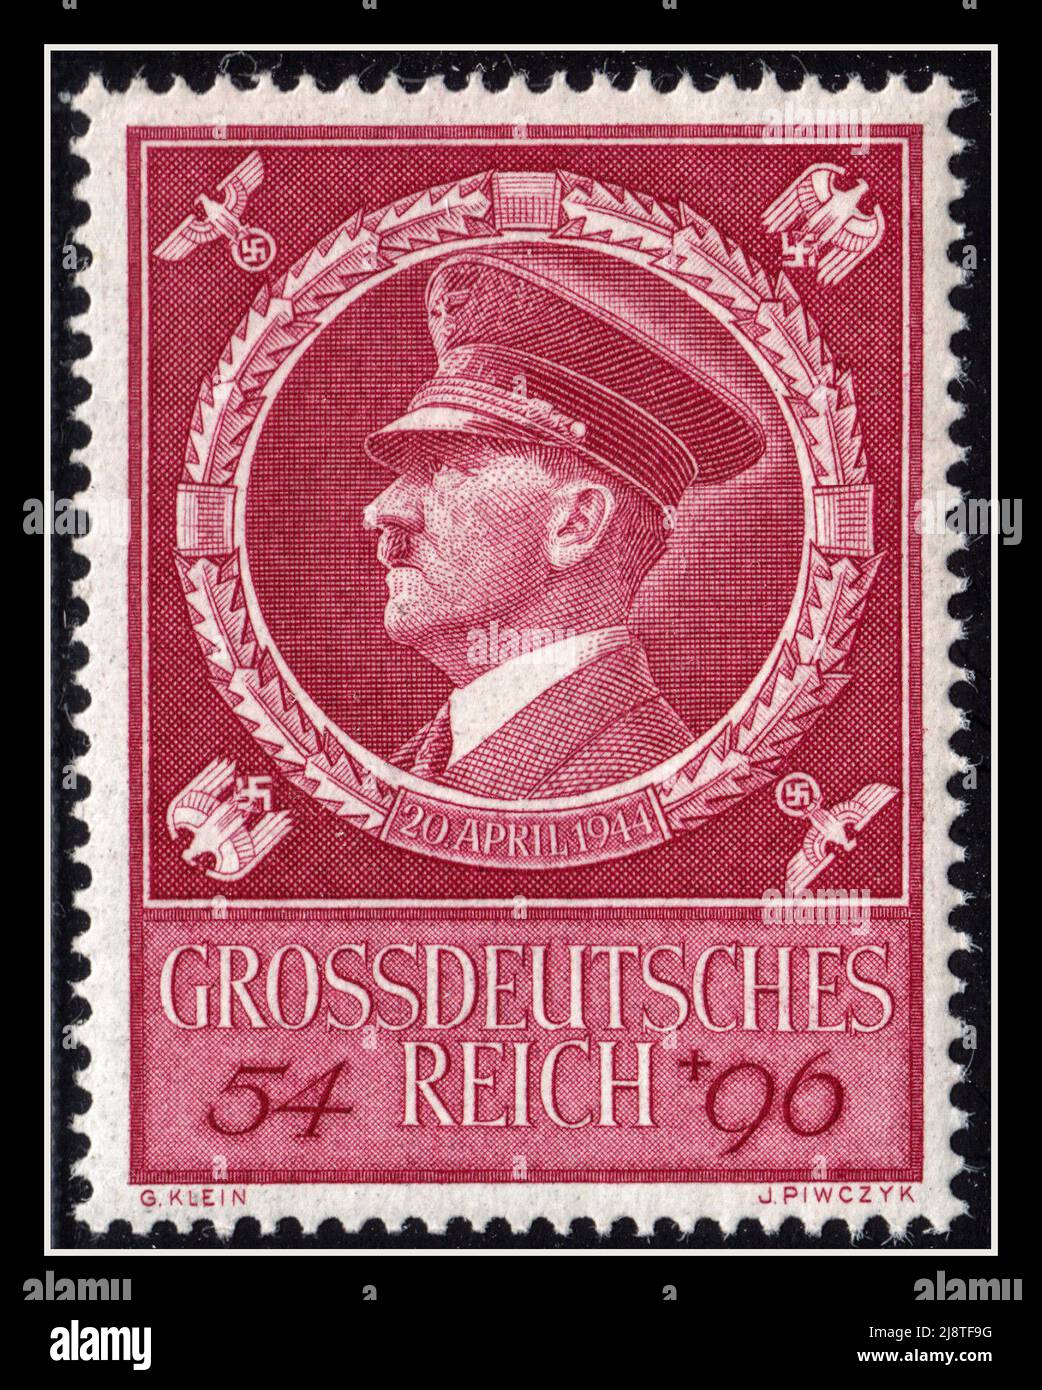 Adolf Hitler Birthday stamp commemorative postage stamp for the Nazi Führer's birthday Date 20th April 1944 Stock Photo